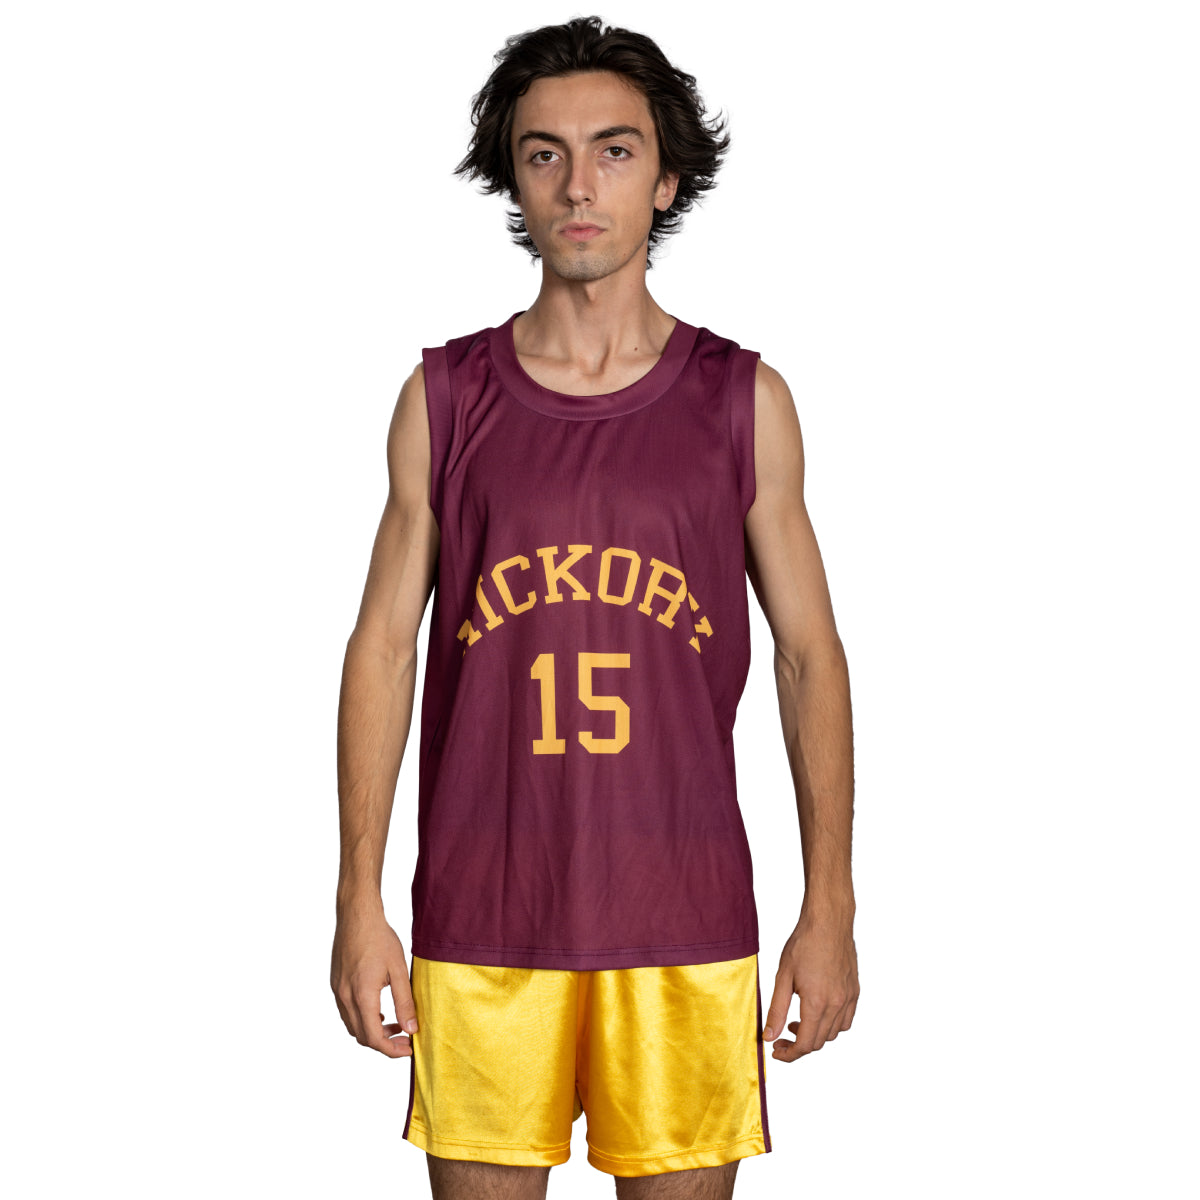 Hoosiers Hickory High School 15 Basketball Costume Burgundy Jersey Tank Top Full